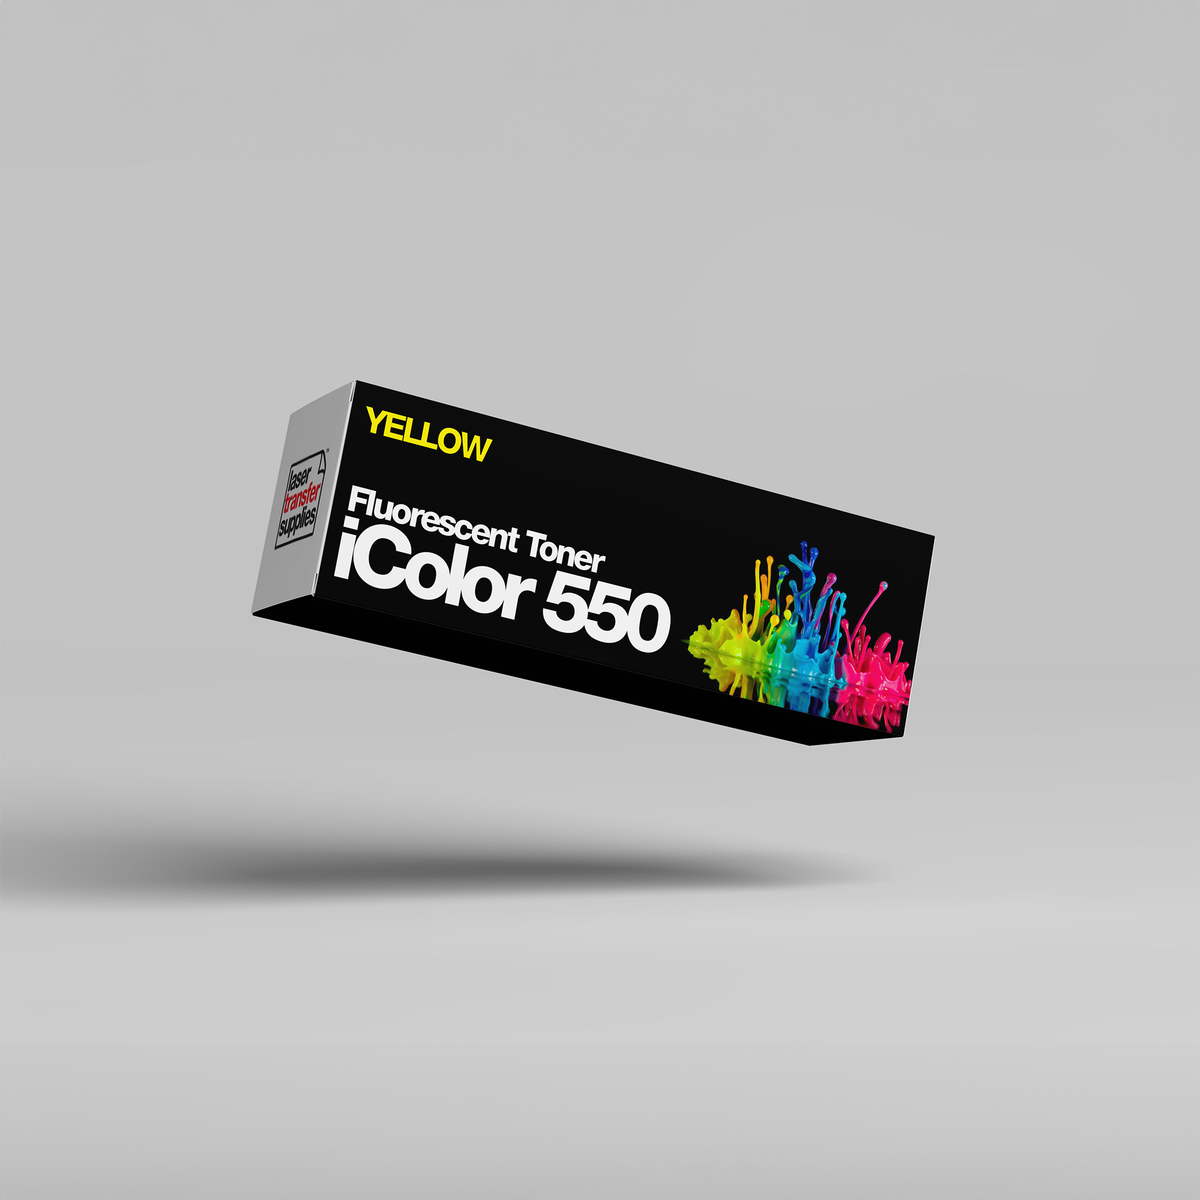 IColor 550 Fluorescent Toner